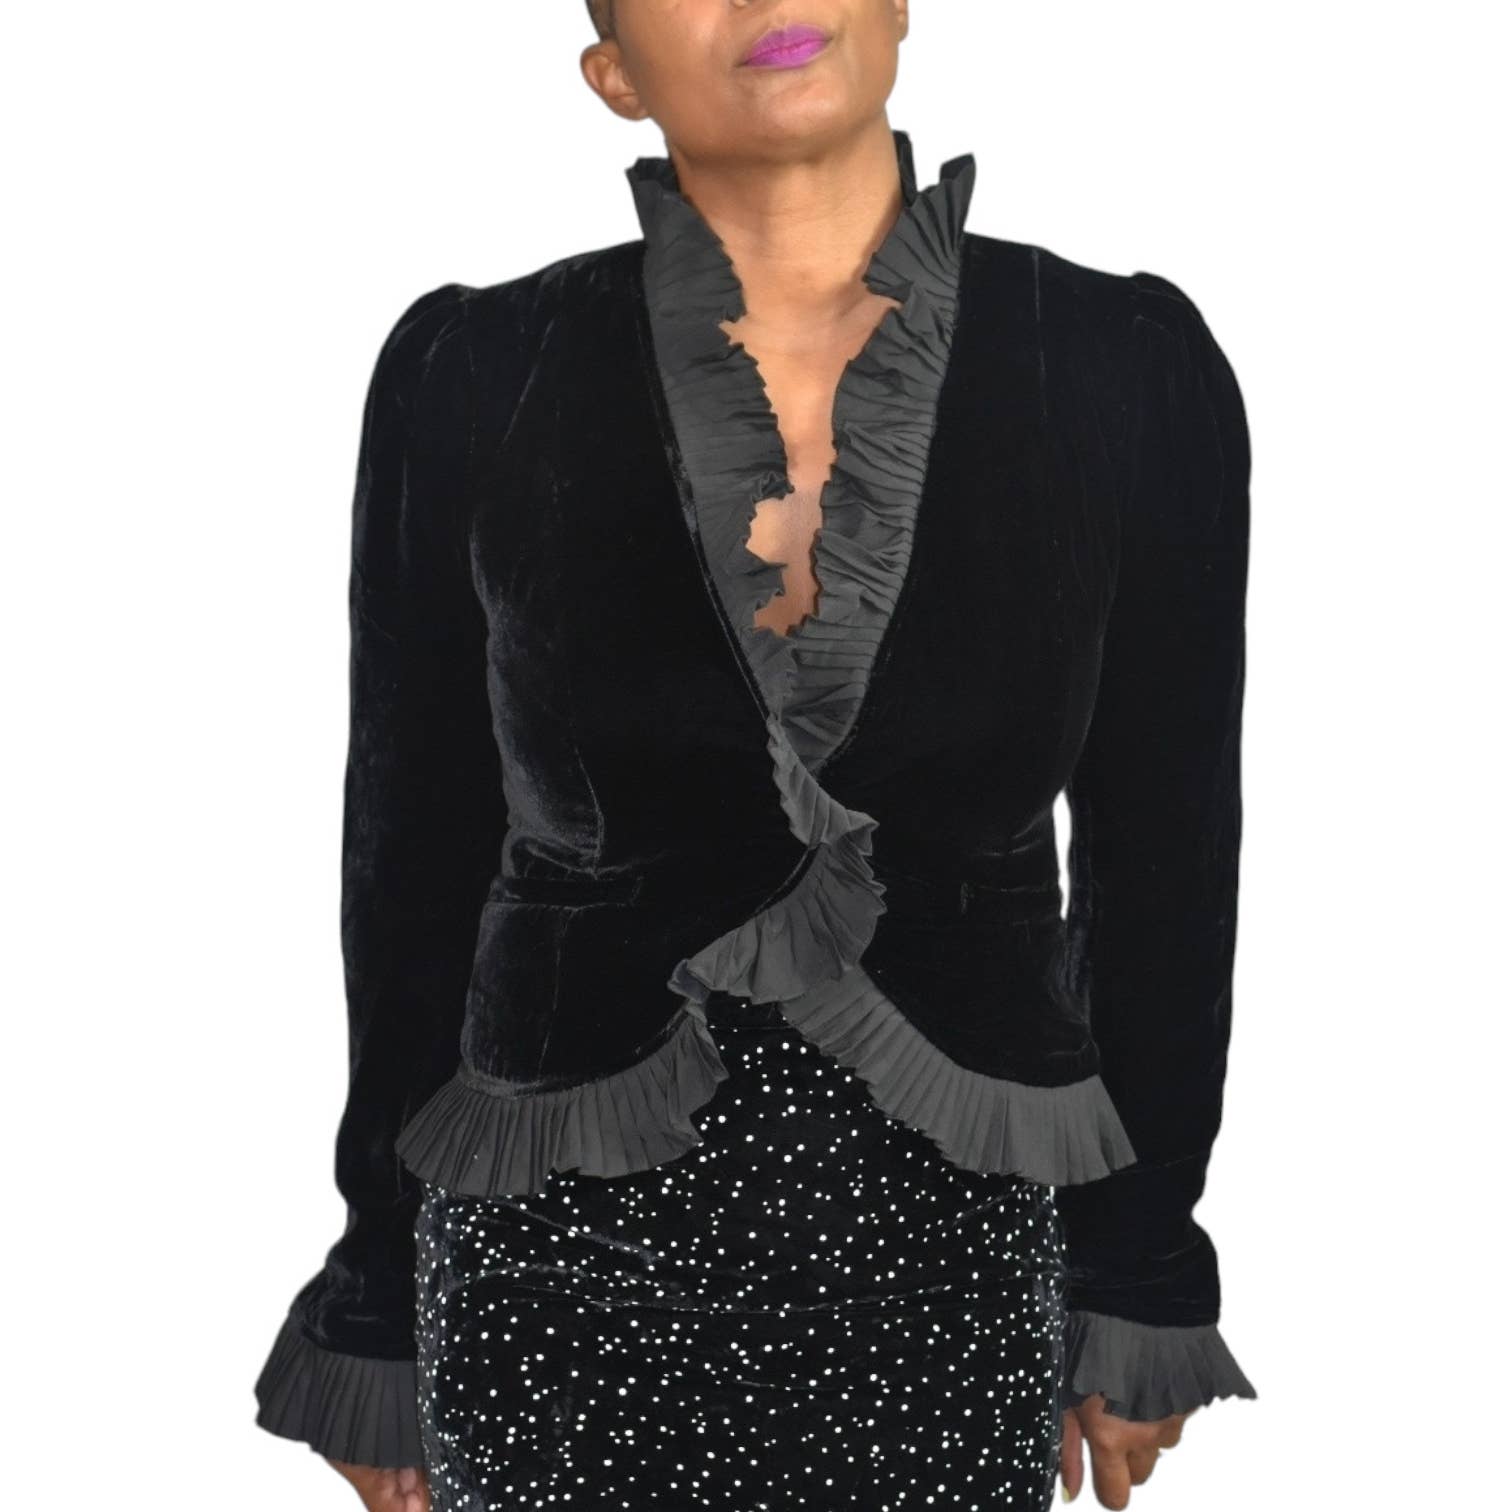 Betsey Johnson Velvet Jacket Black Blazer Ruffled Puff Sleeve Victorian Y2K Size Small